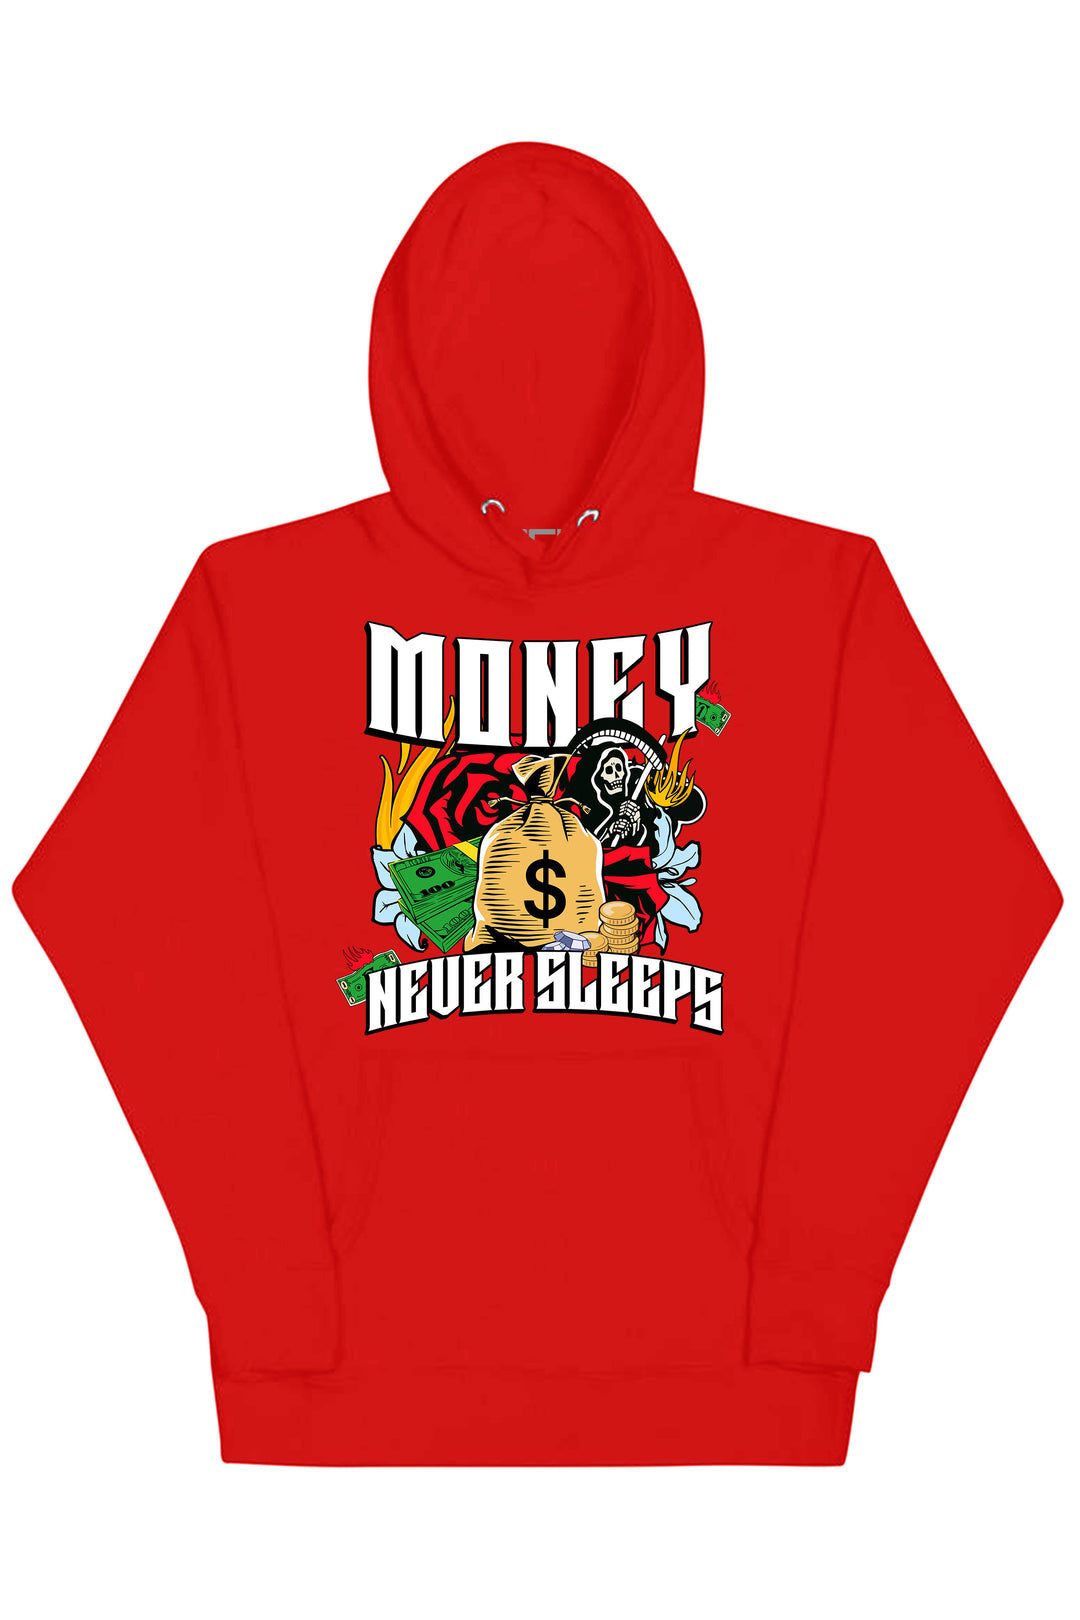 Money Never Sleeps Hoodie (Multi Color Logo) - Zamage